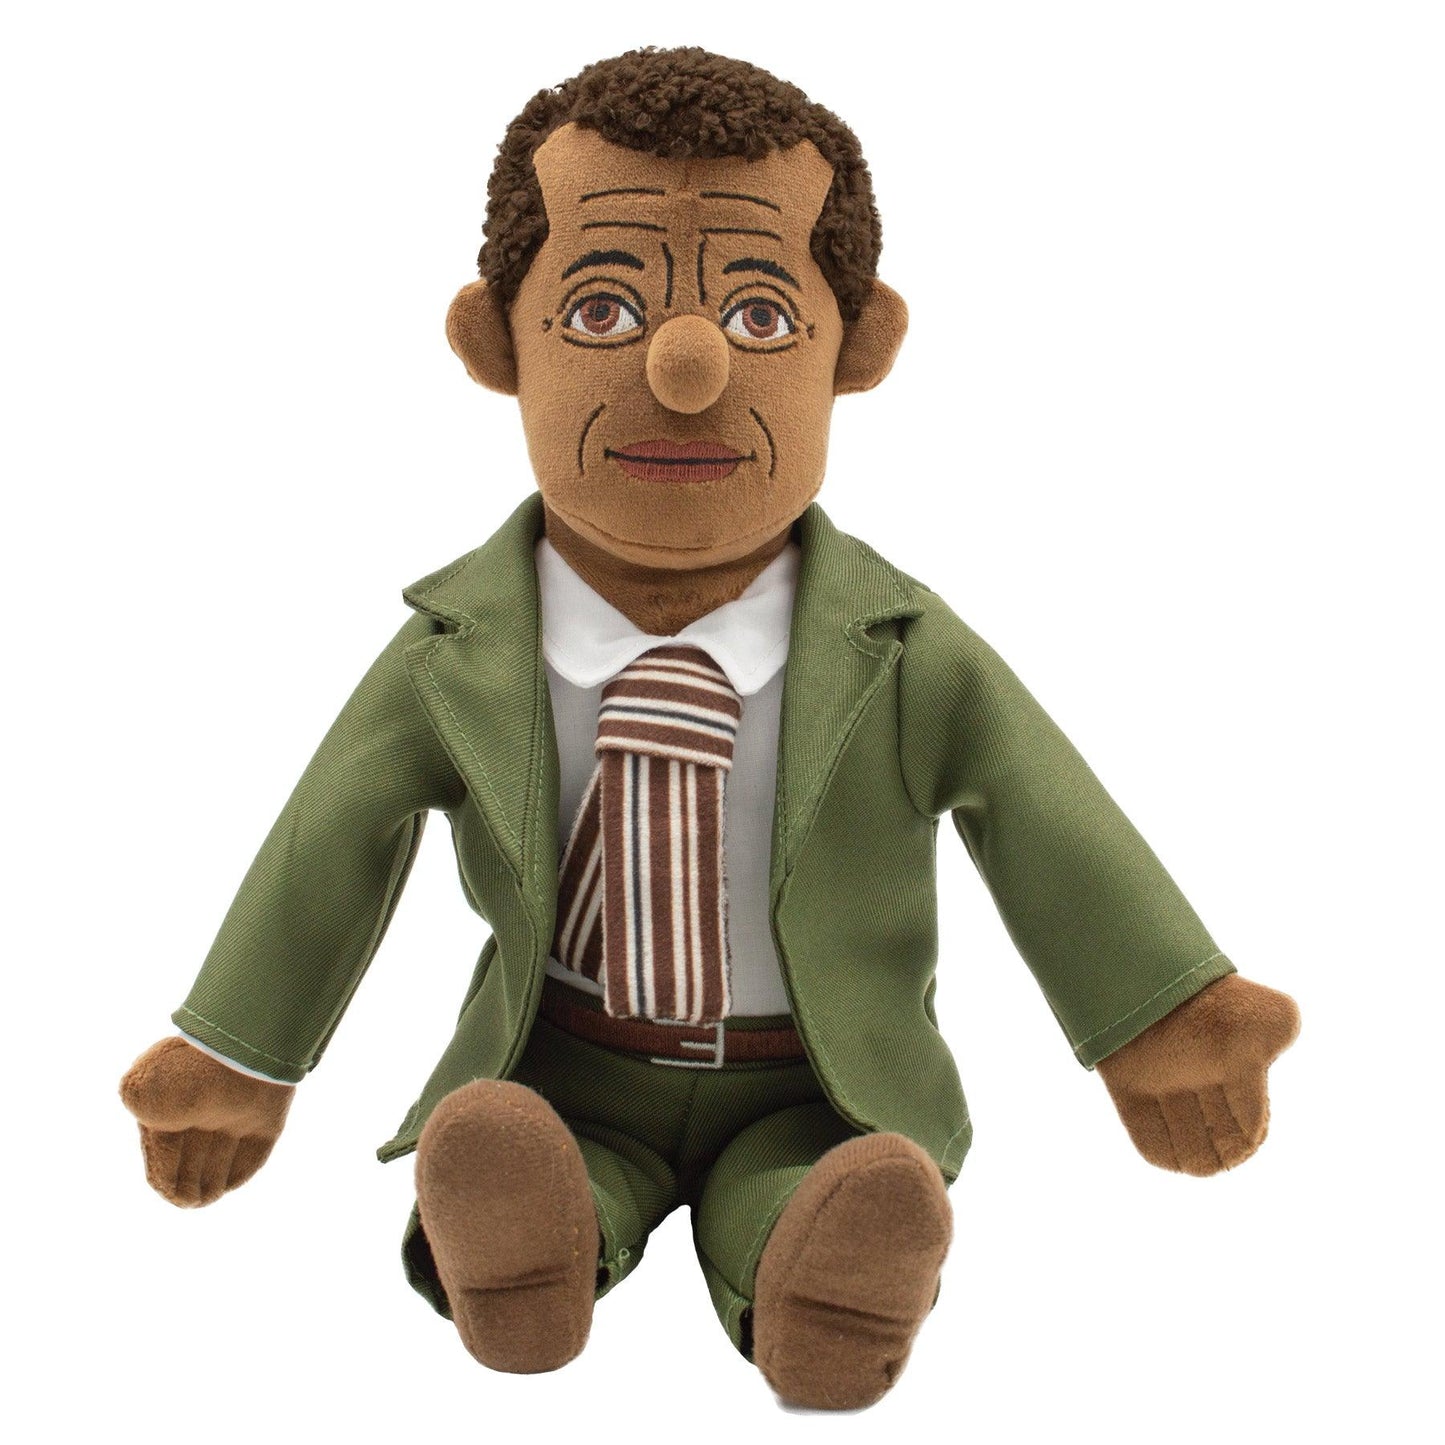 James Baldwin "Little Thinker" Plush Doll